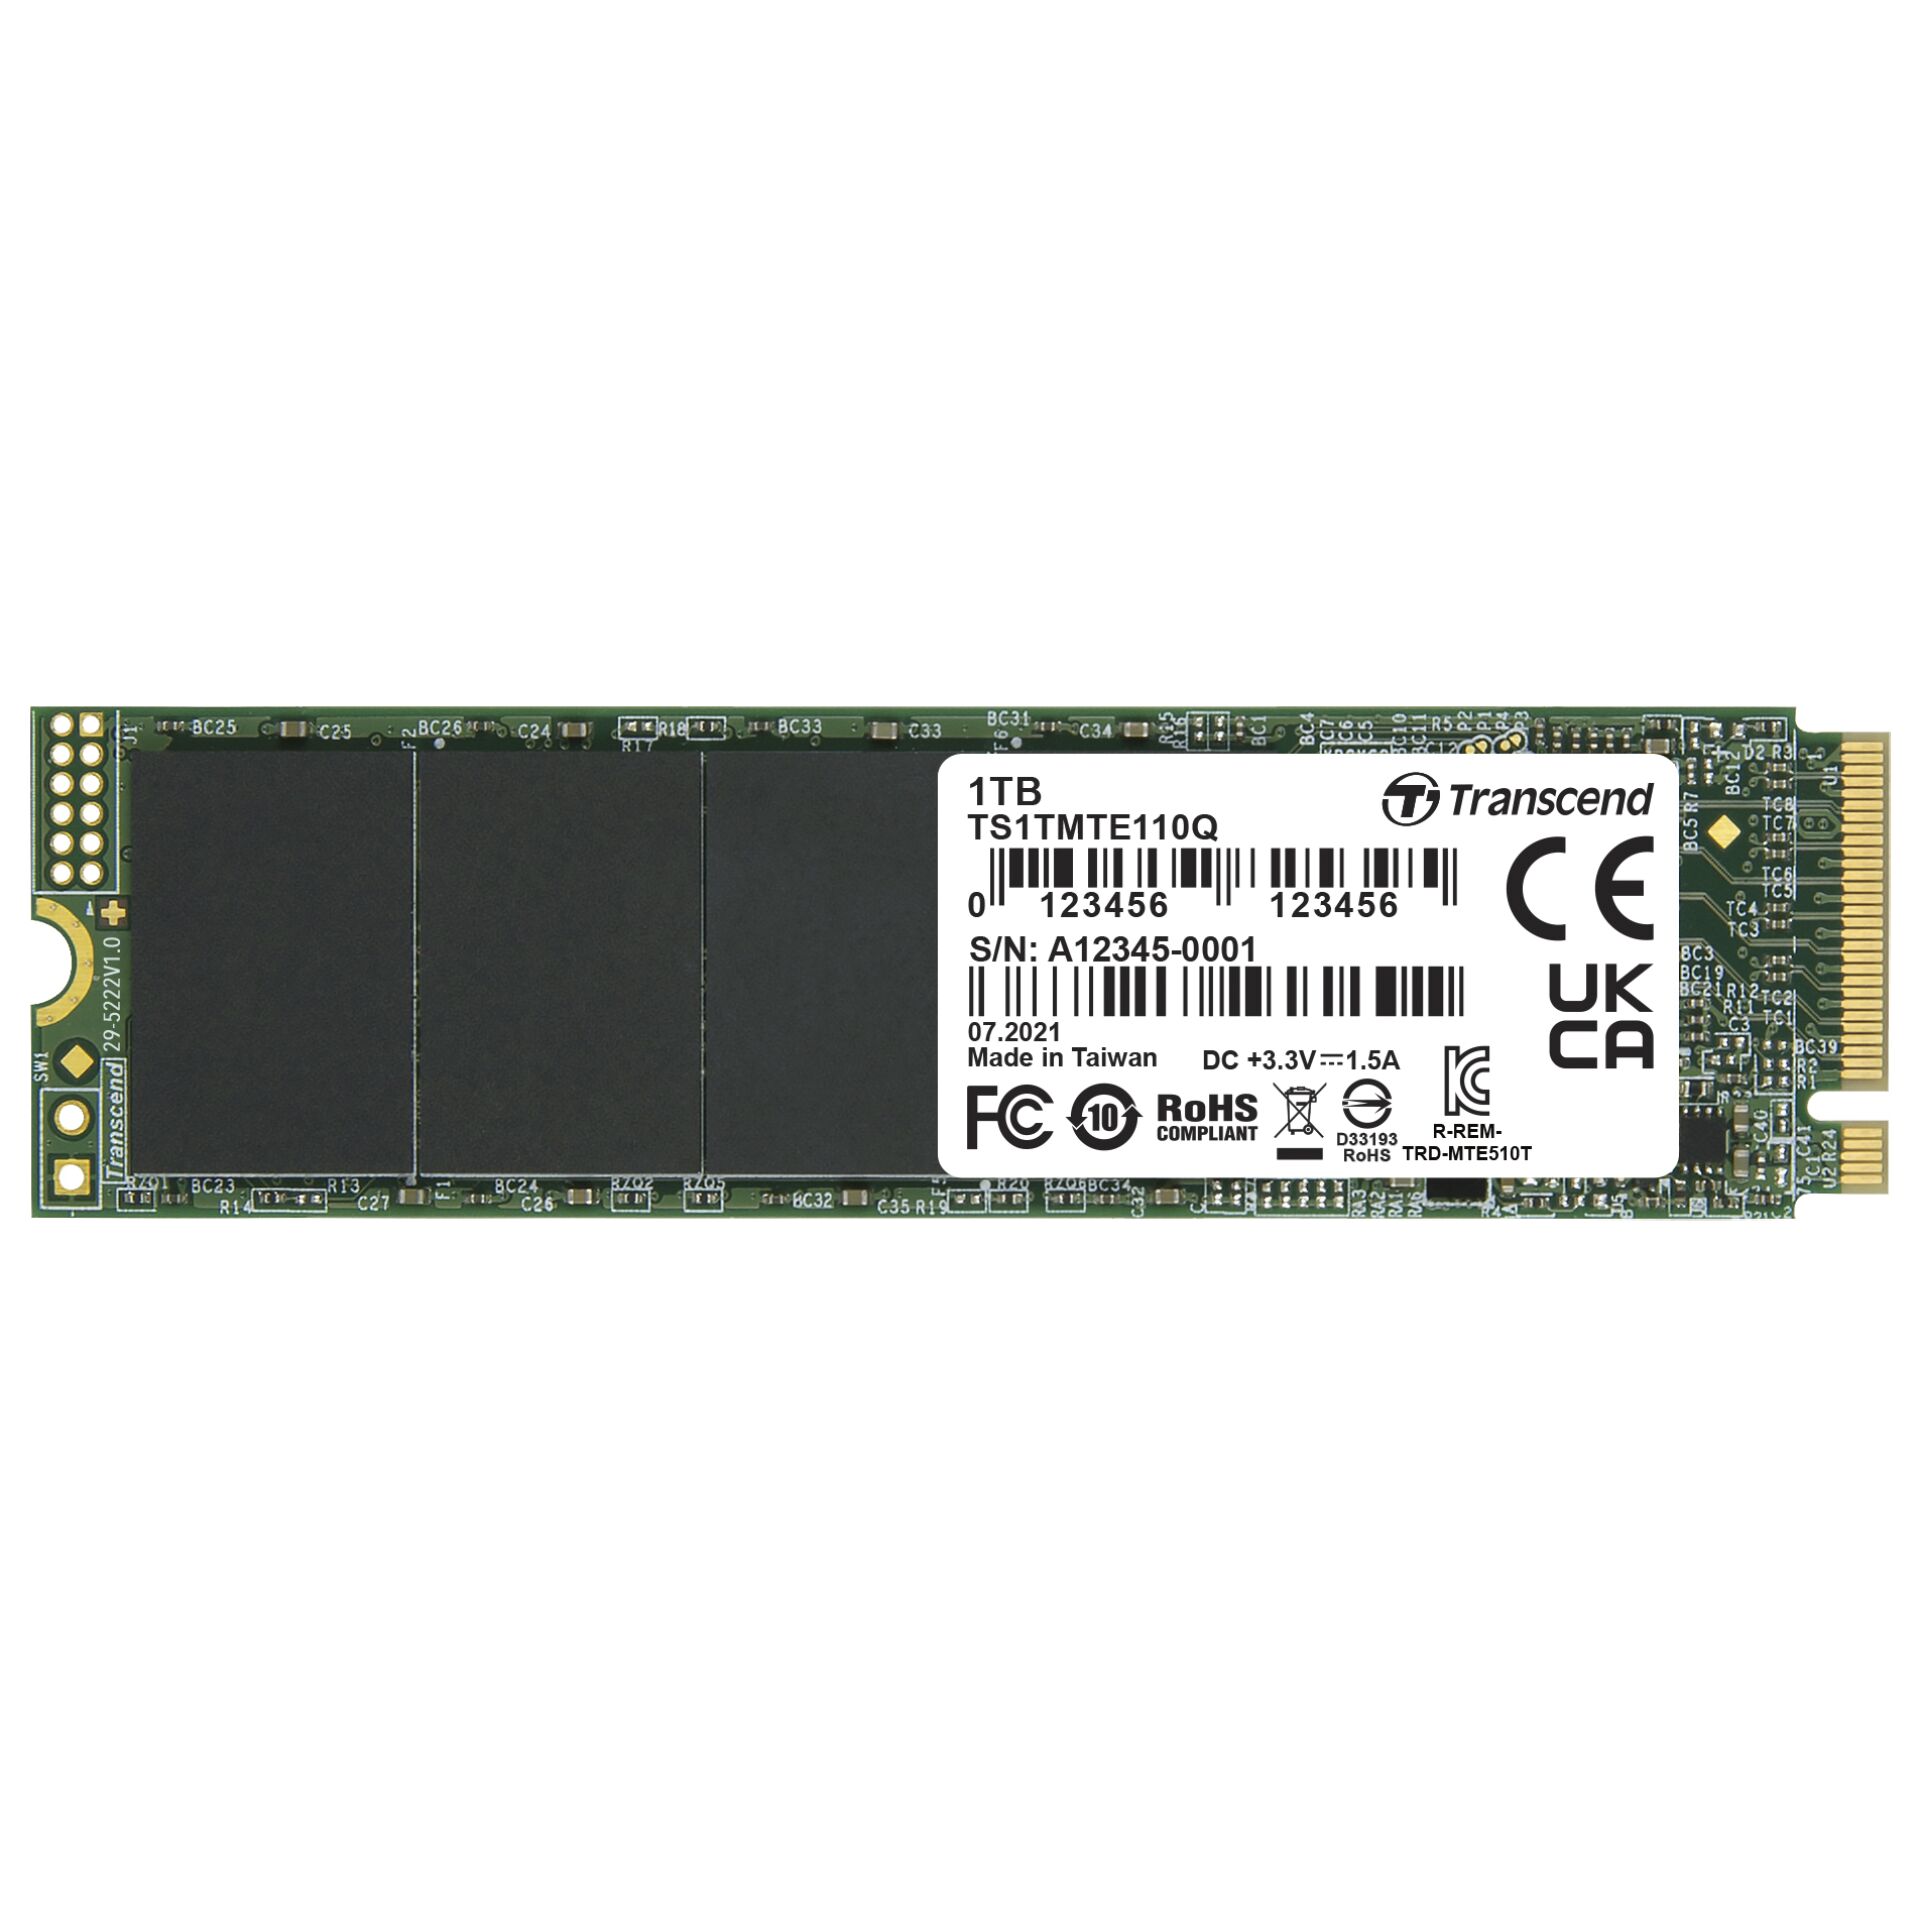 Transcend SSD MTE110Q        1TB NVMe PCIe Gen3 x4